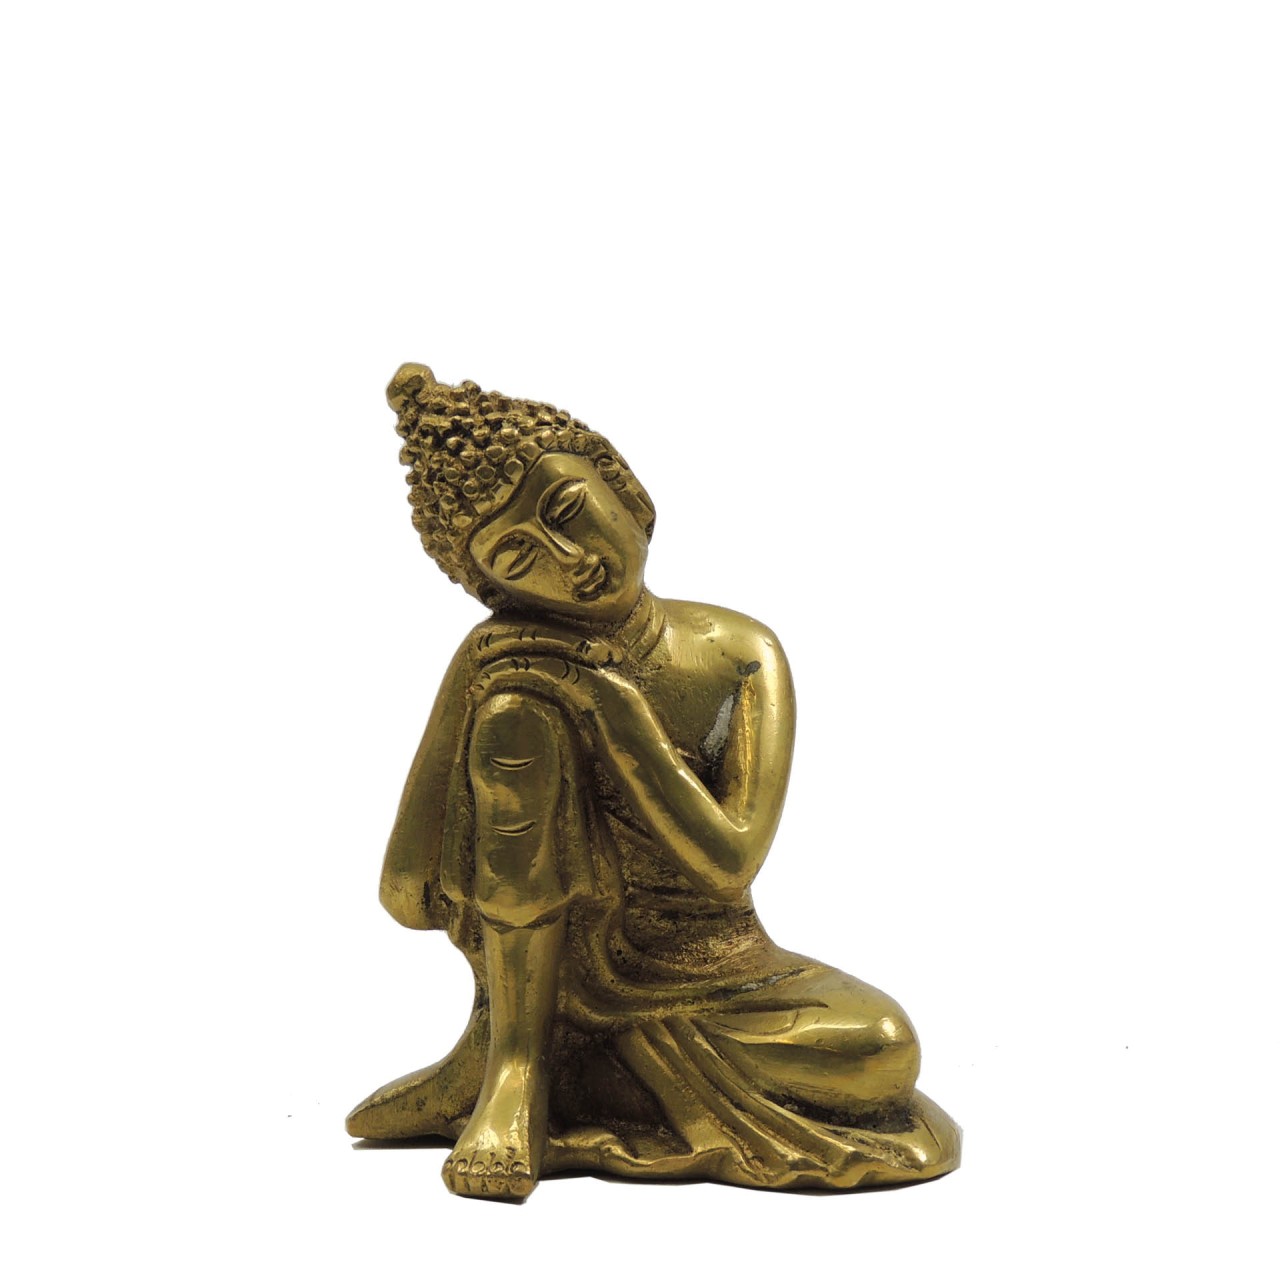 Messingfigur "Sleeping Buddha" ca. 9 cm - goldfarben - Handwerk Indien